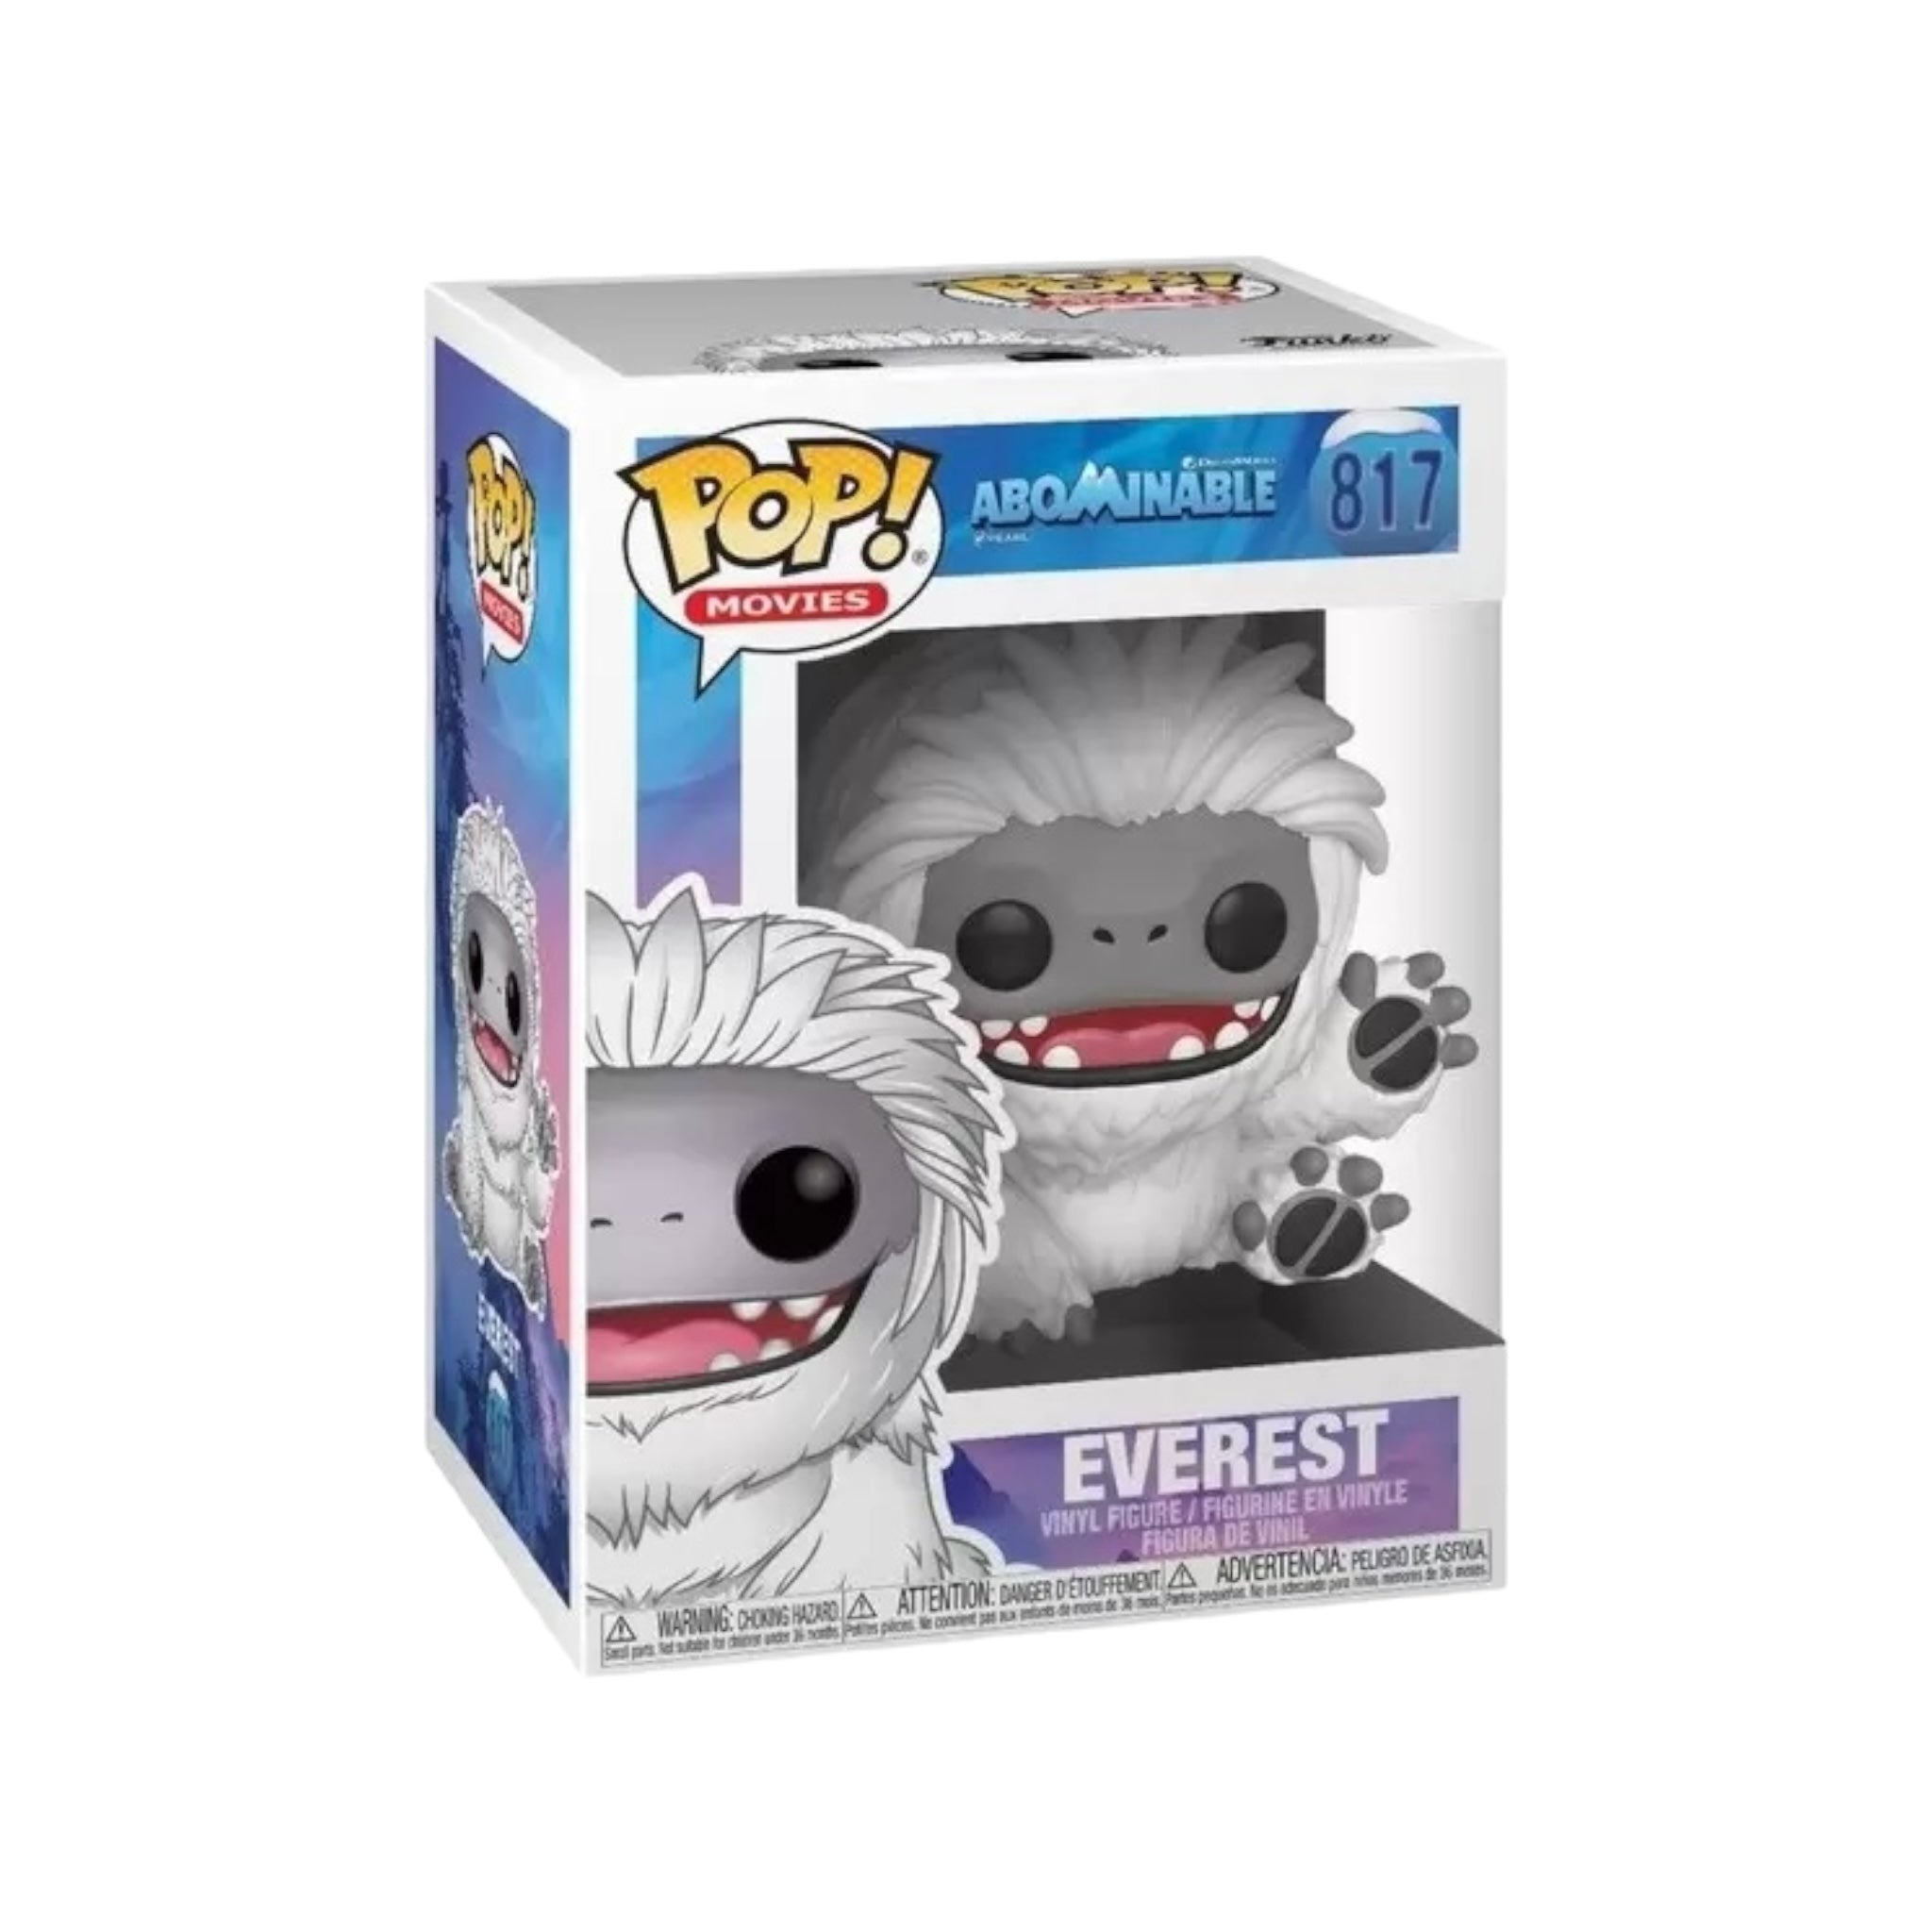 Everest #817 Funko Pop! - Abominable